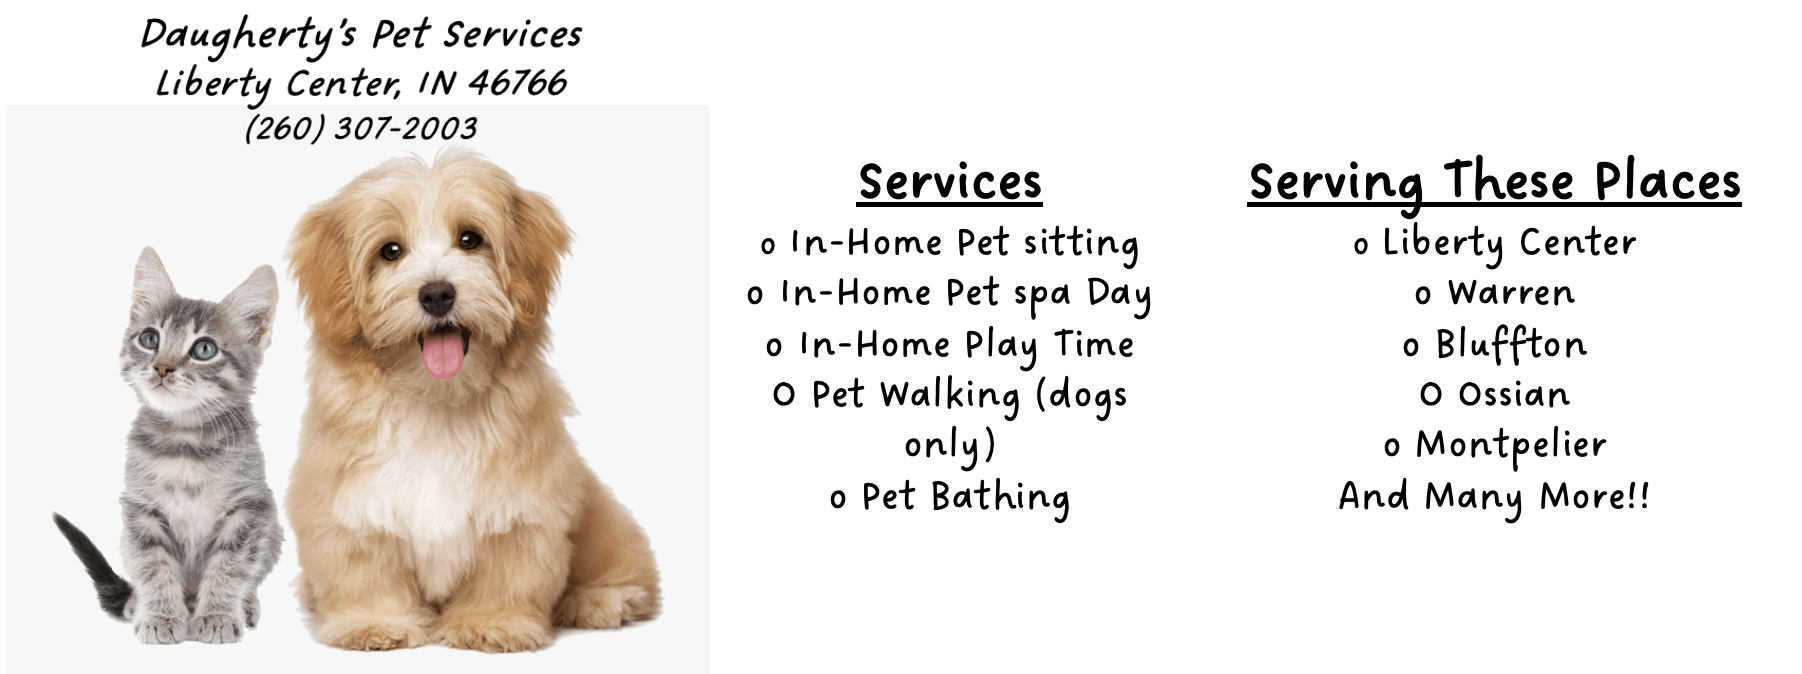 Daugherty's Pet Services